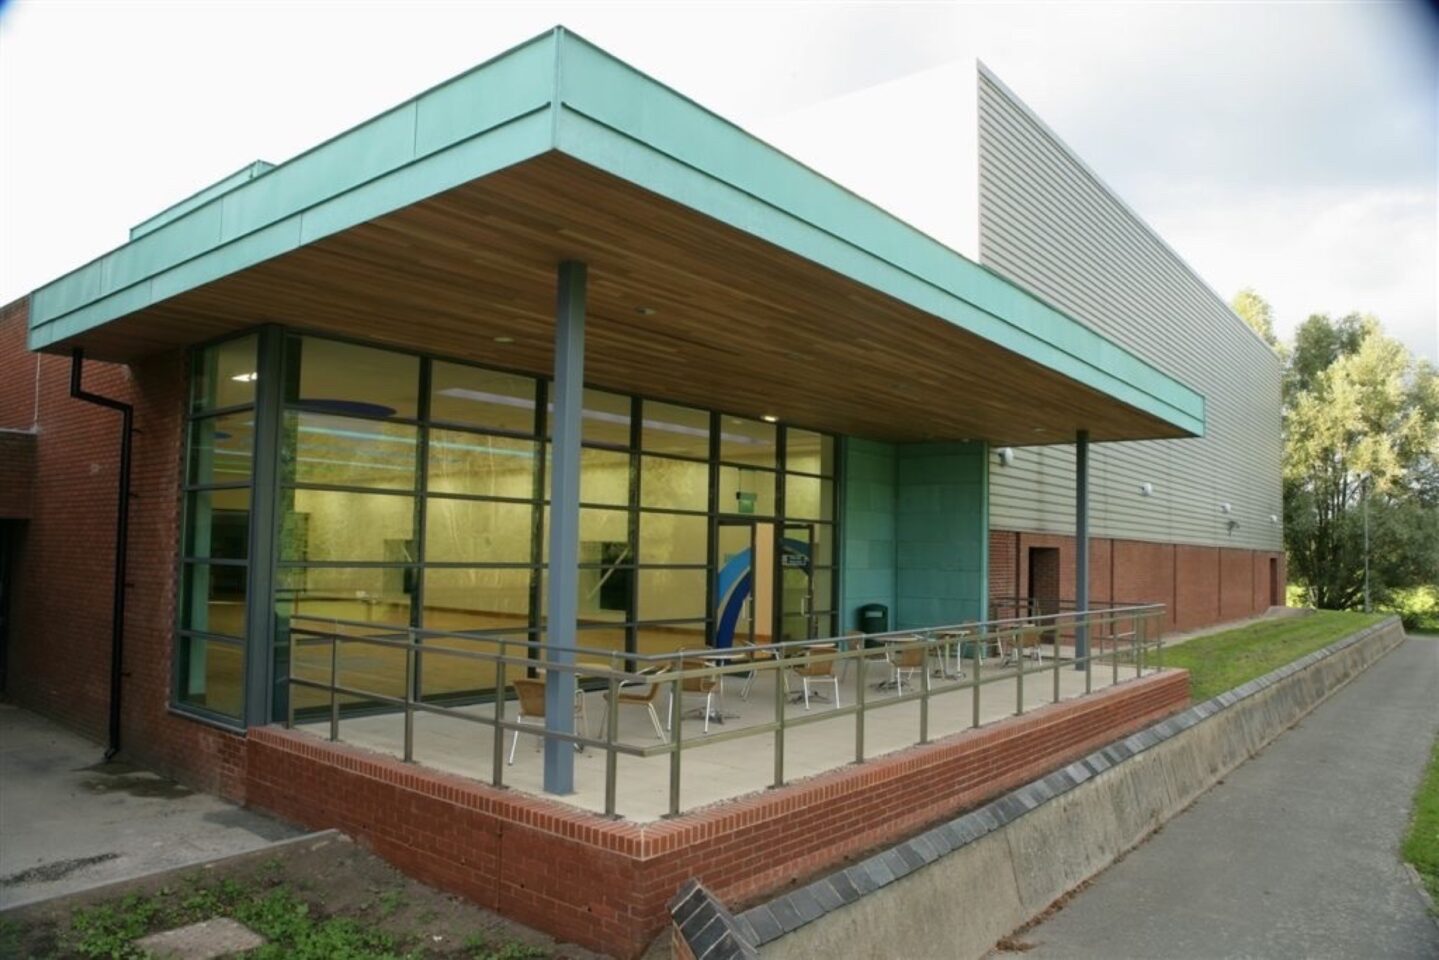 Meadowside Leisure Centre, Burton Upon Trent